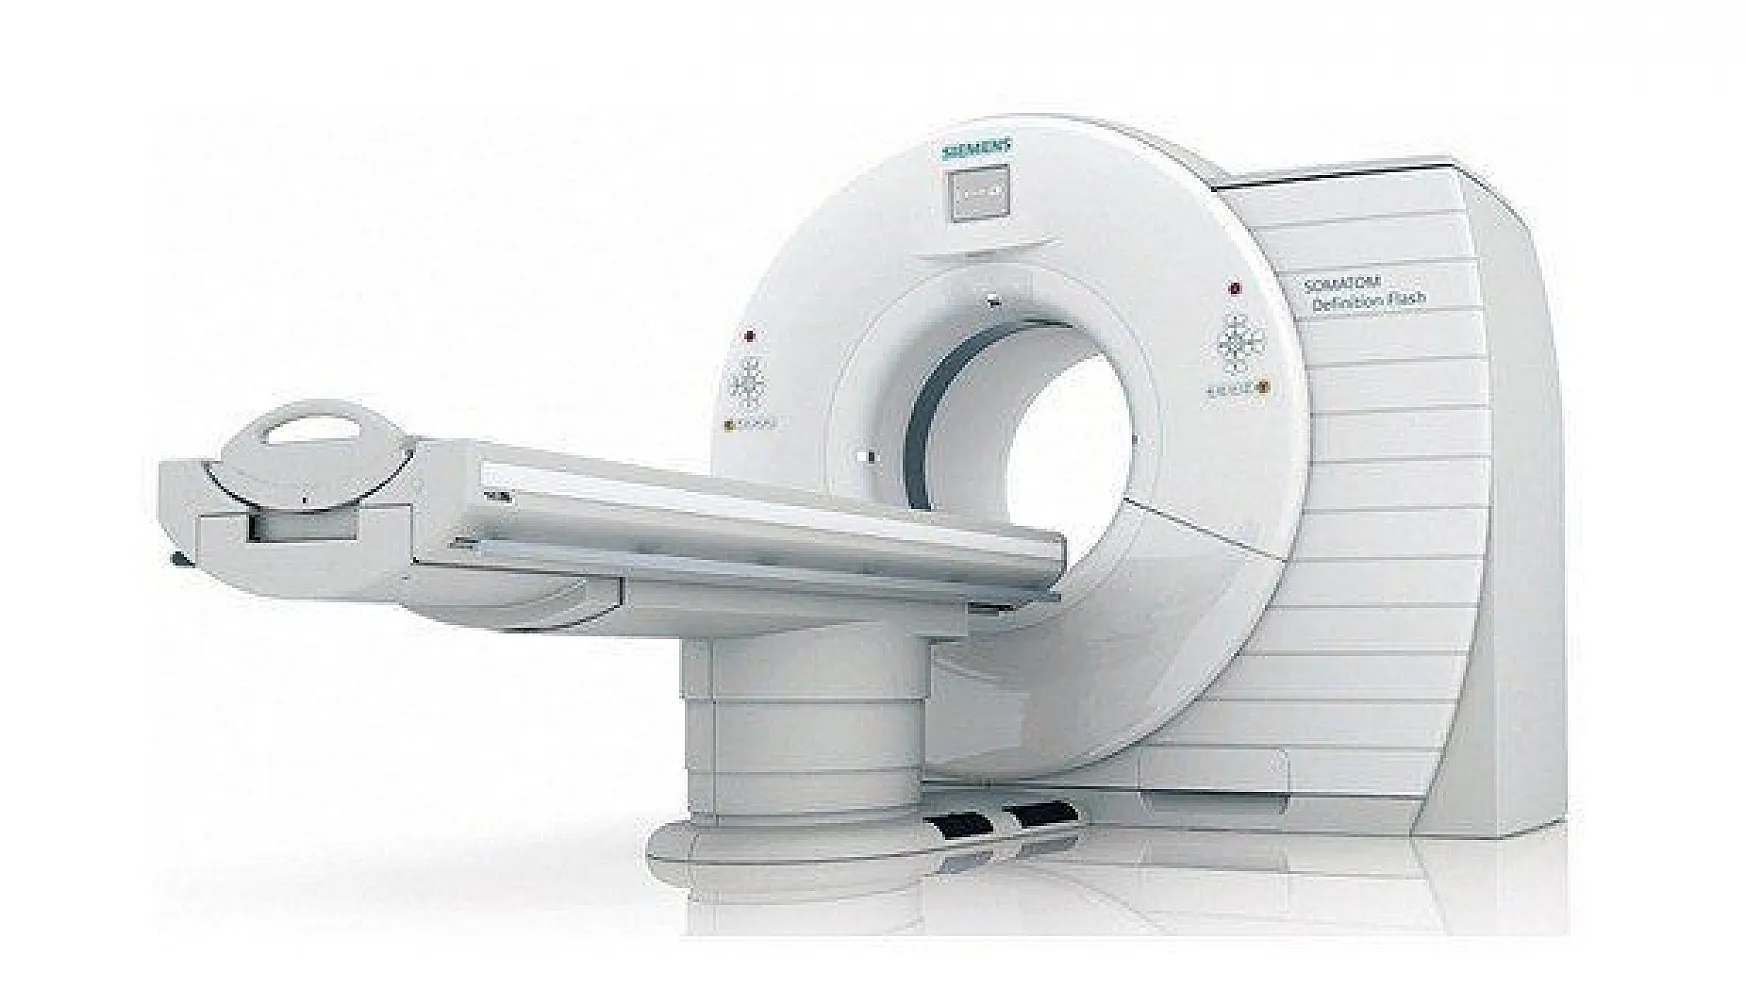 Üniversite Hastanesine PET-CT cihazı